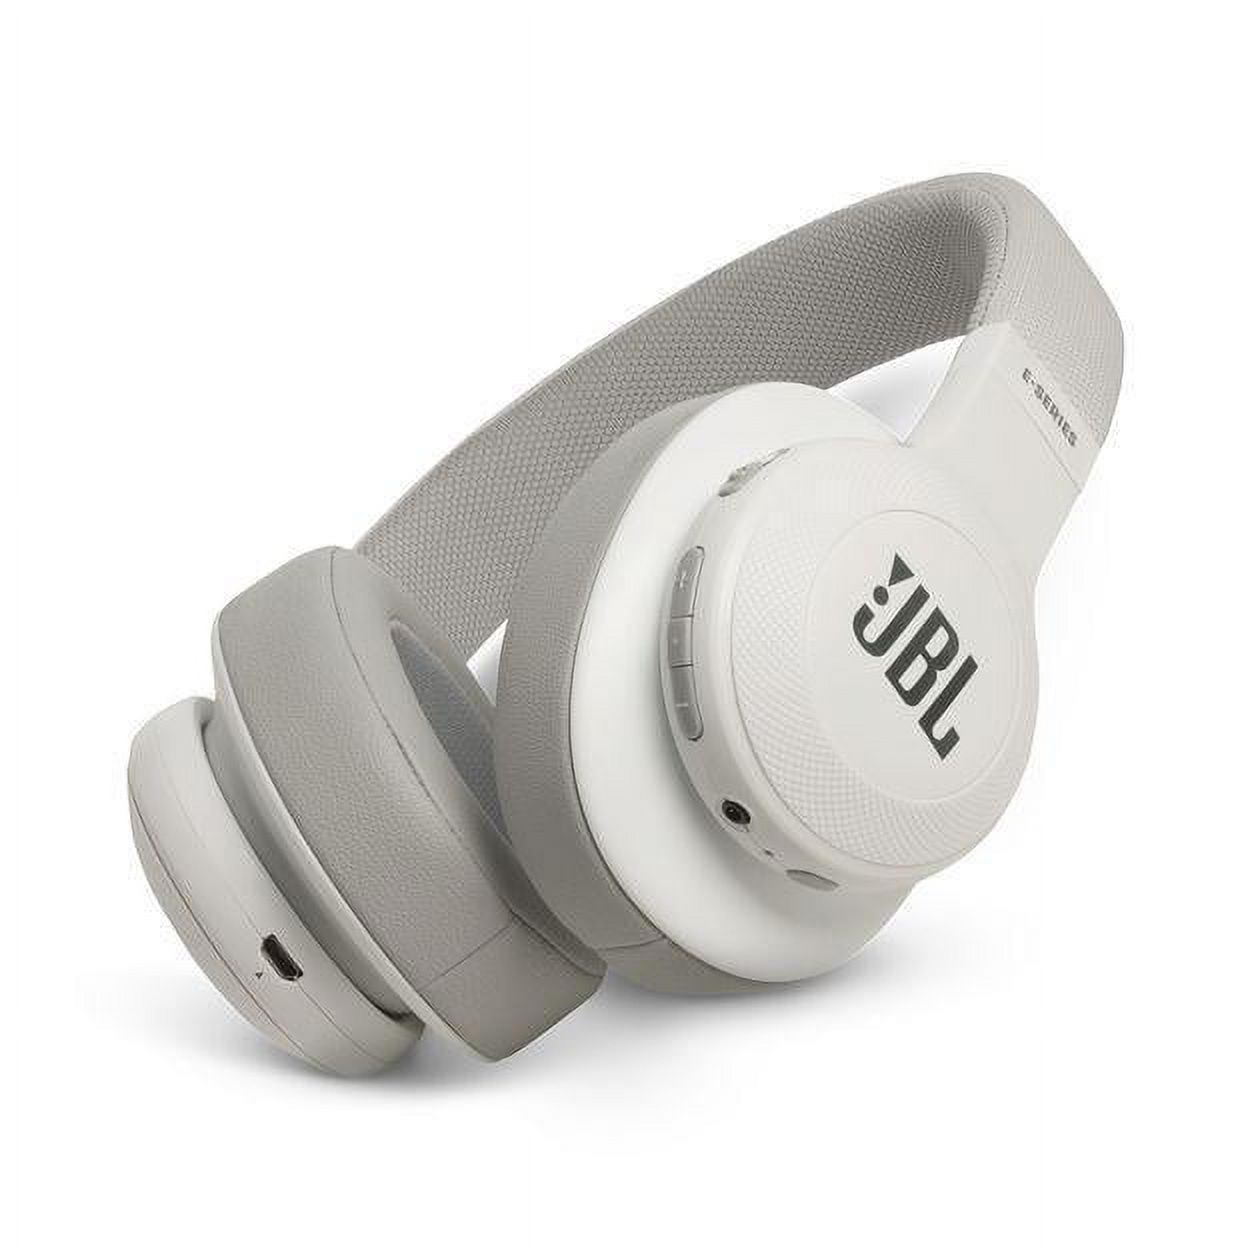 JBL E55BT On-Ear Wireless Headphones (Black) - image 3 of 3